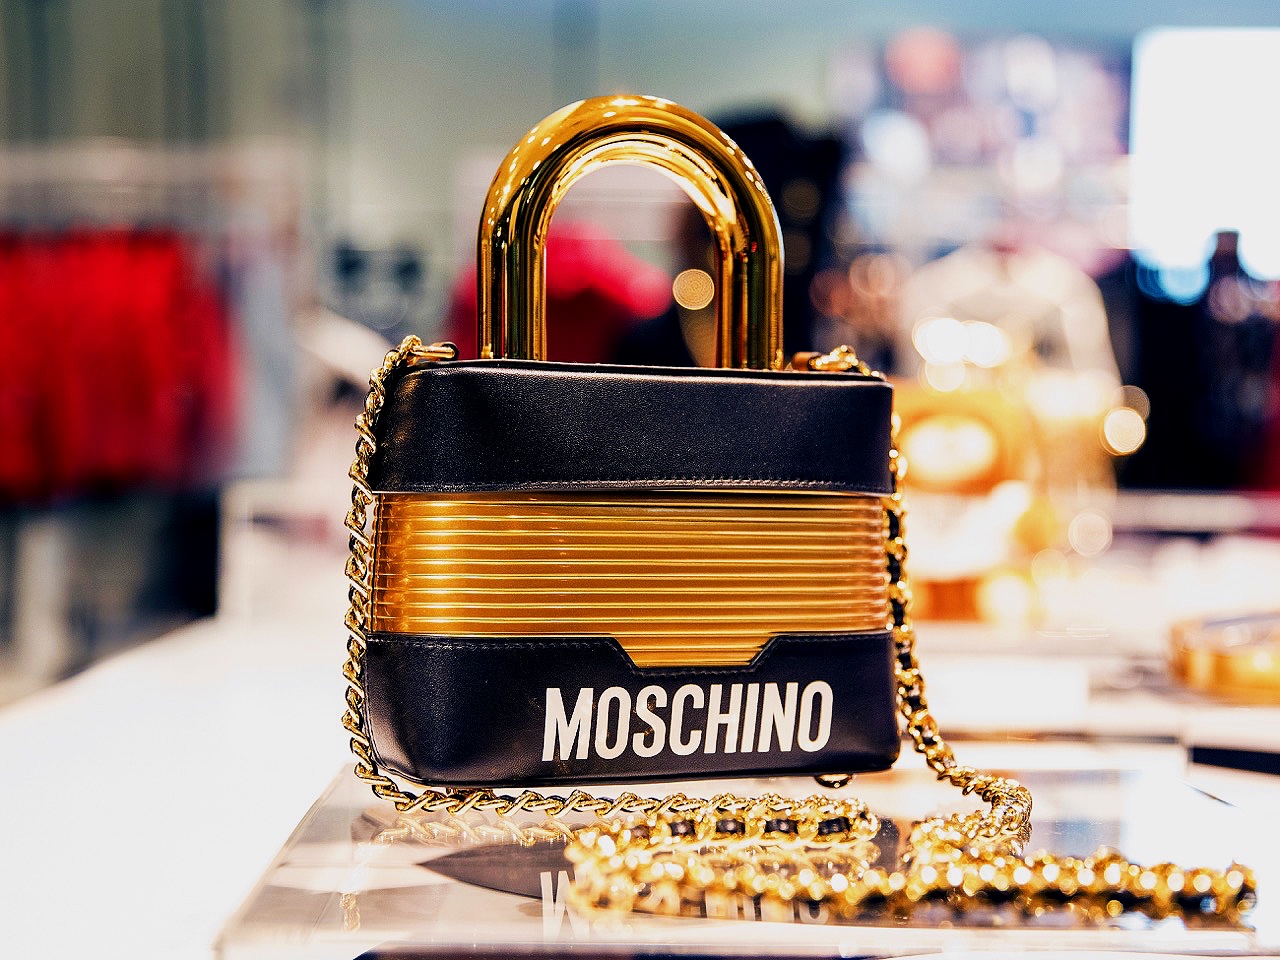 Iconic Moschino purse